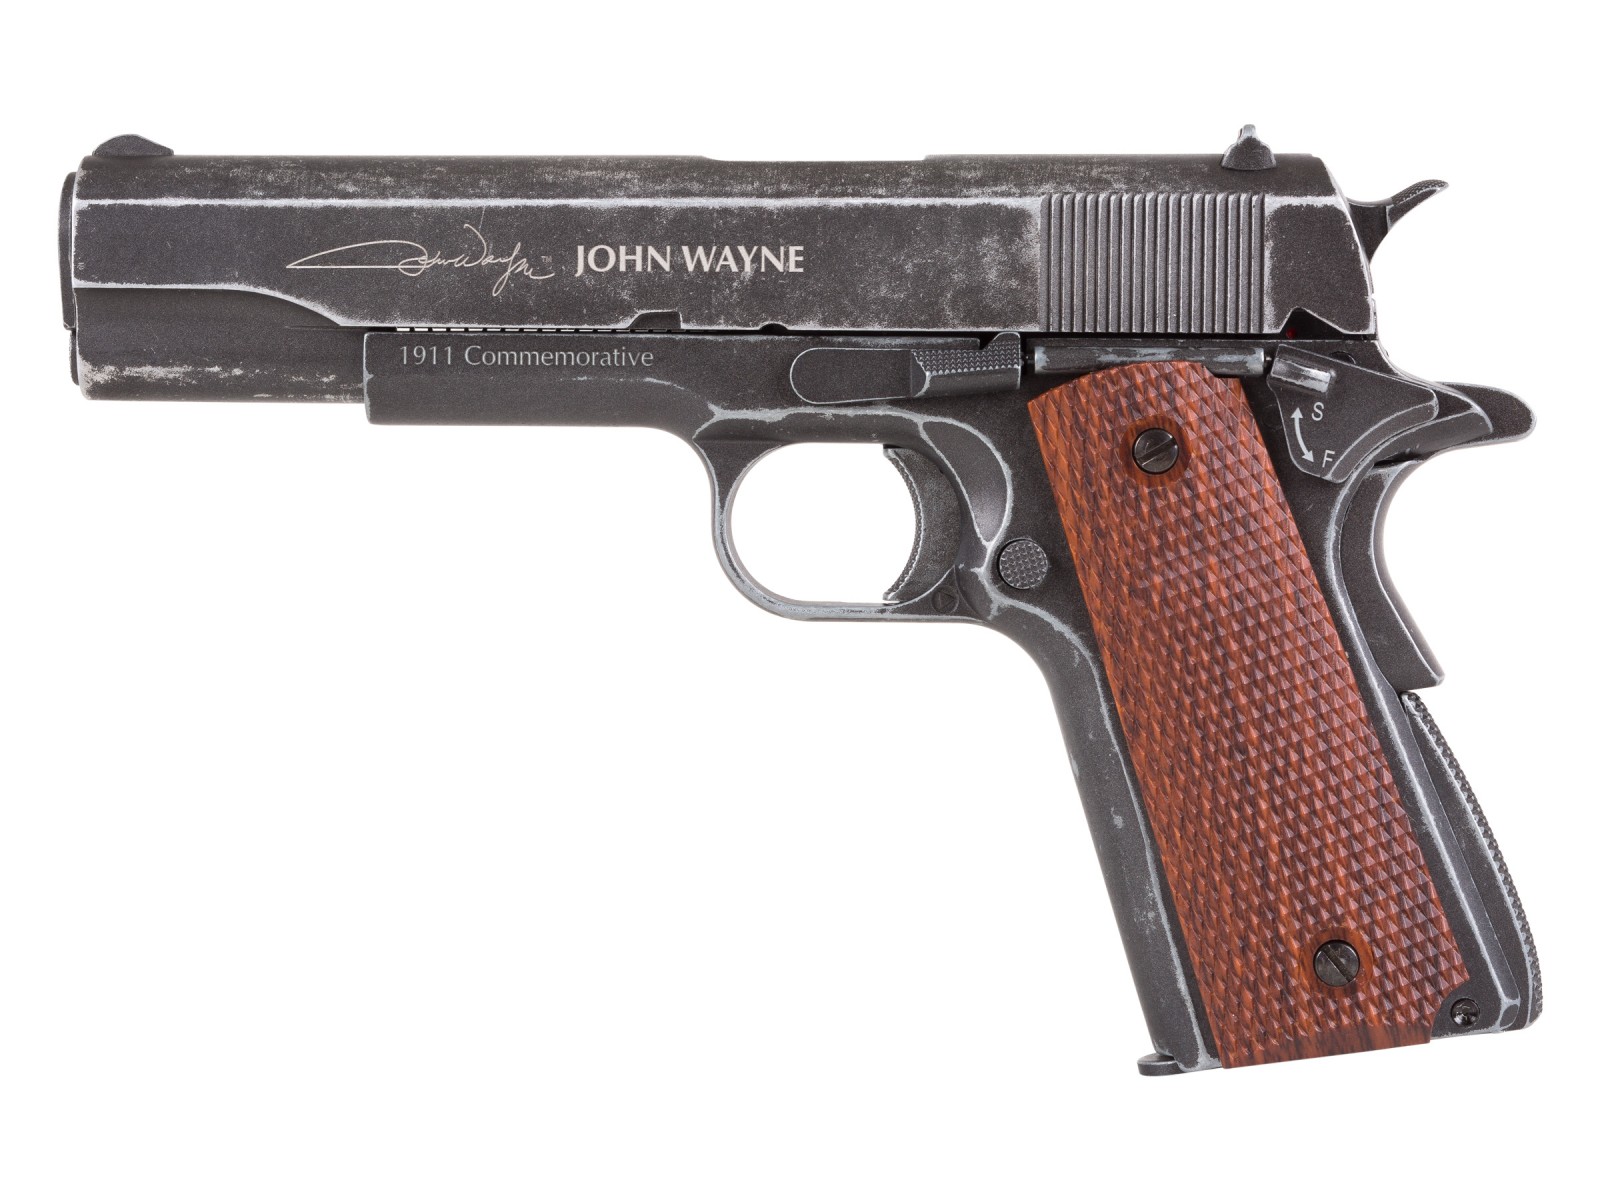 SPRINGFIELD ARMORY CO2 Pistol Airgun 1911 John Wayne